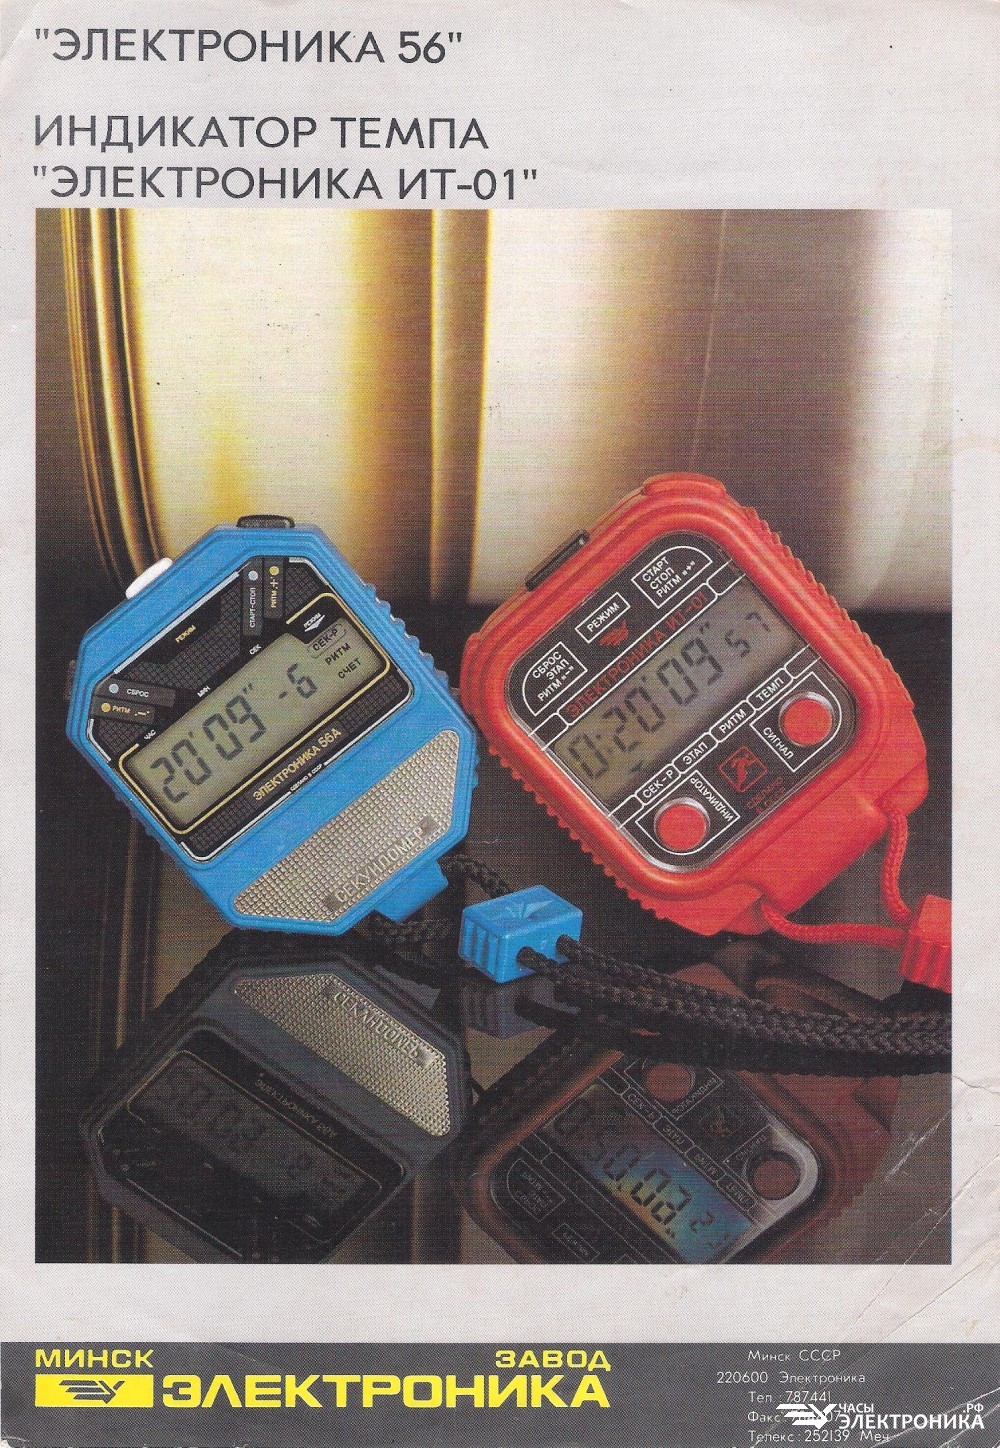 Рекламная листовка «Электроника 56», «Индикатор темпа «Электроника ИТ-01»